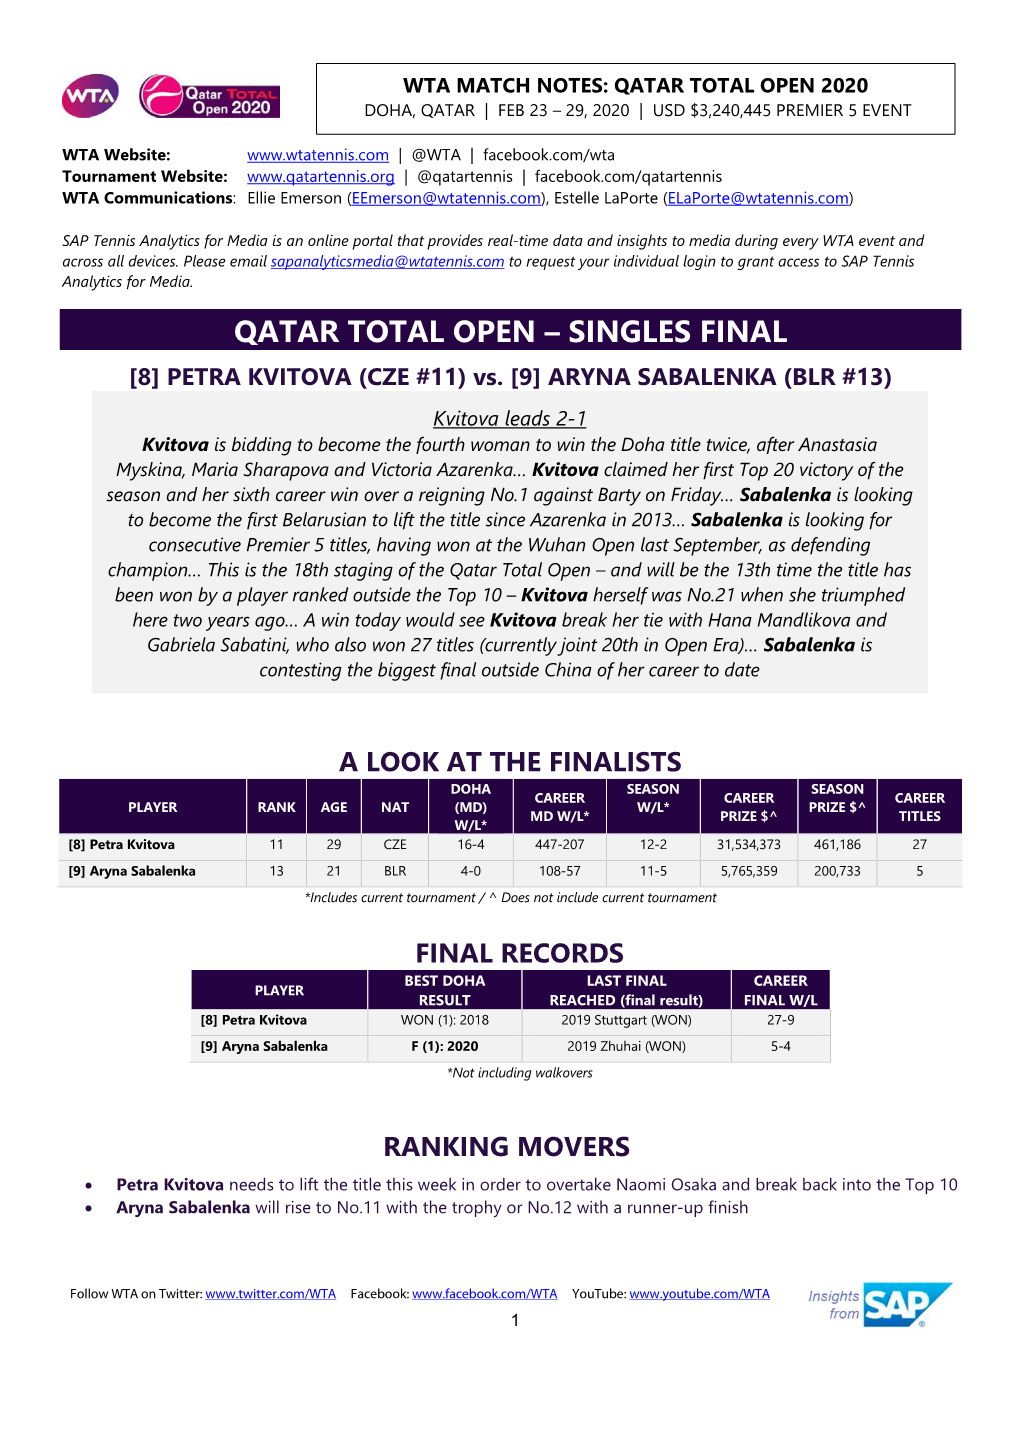 Qatar Total Open – Singles Final